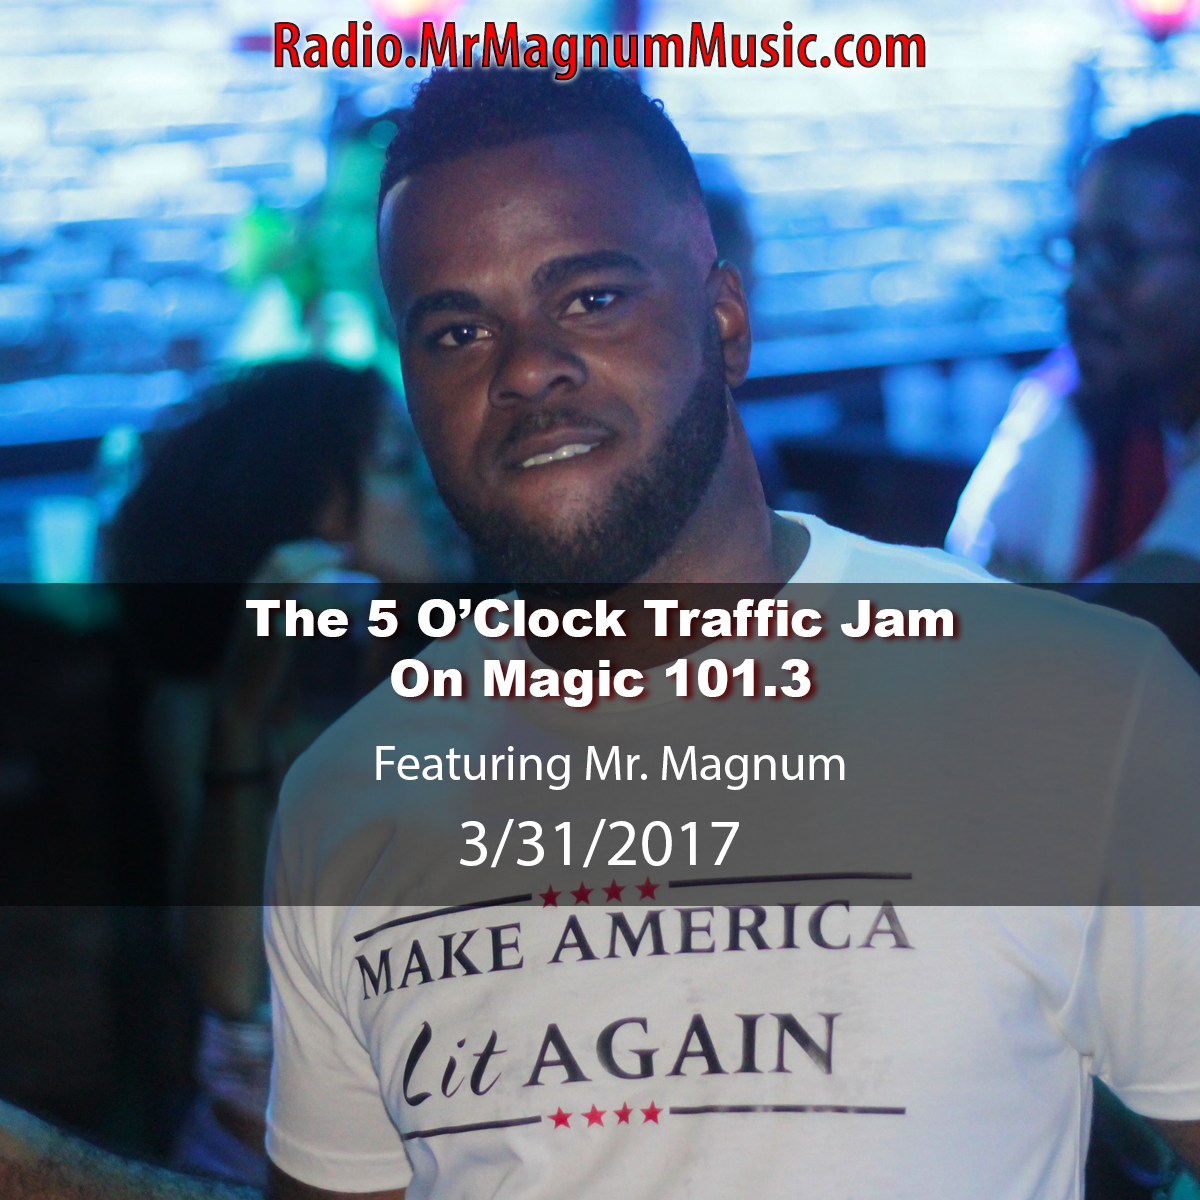 The 5 O'Clock Traffic Jam 20170331 featuring Gainesville's #1 DJ, Mr. Magnum on Magic 101.3